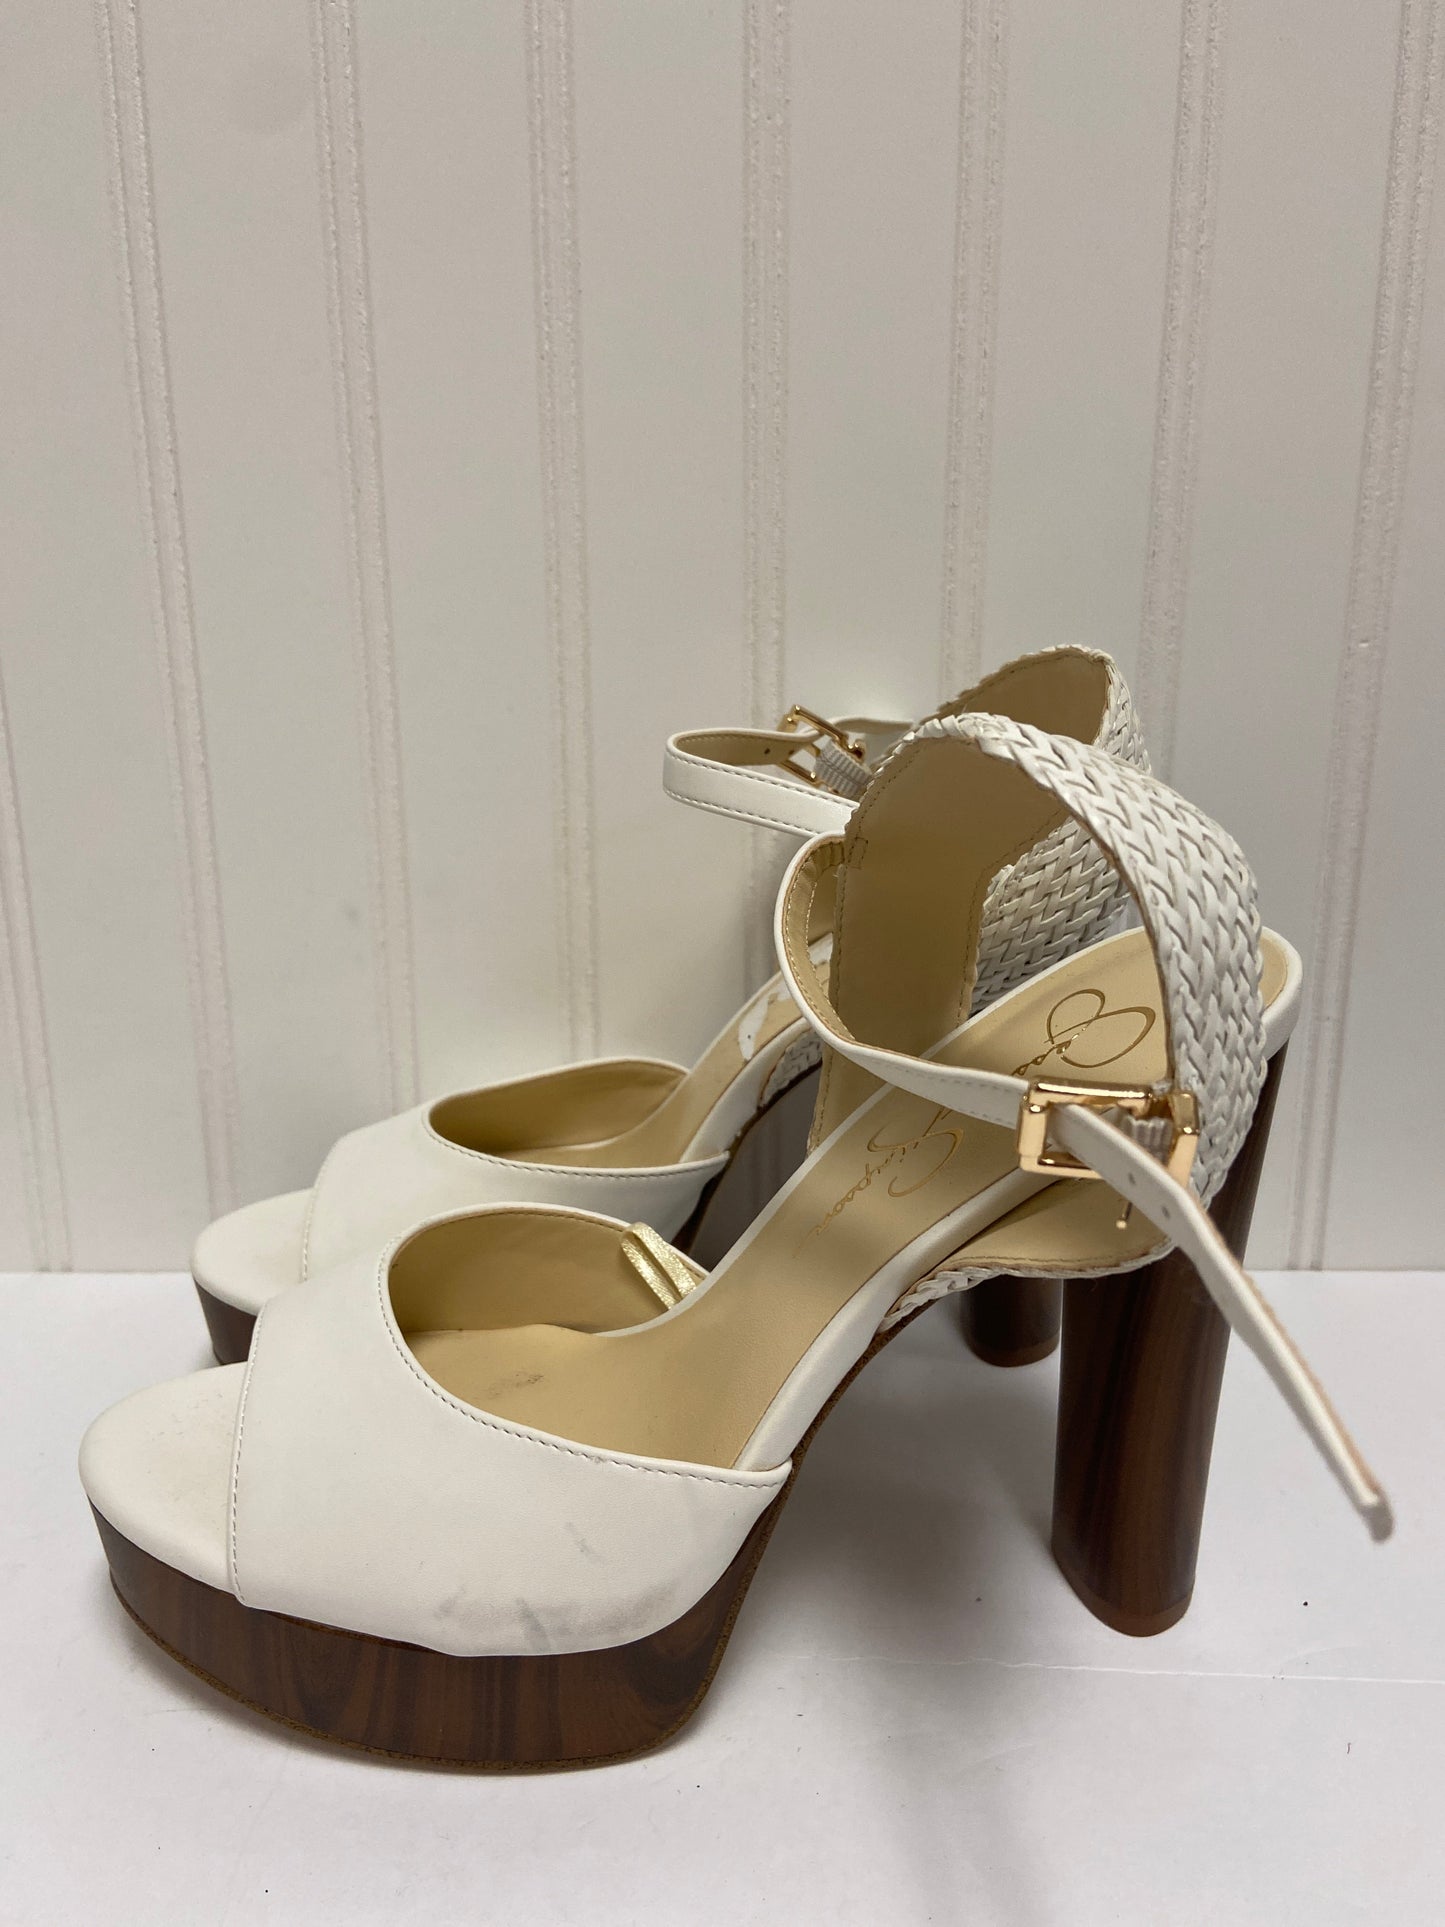 Sandals Heels Stiletto By Jessica Simpson  Size: 8.5